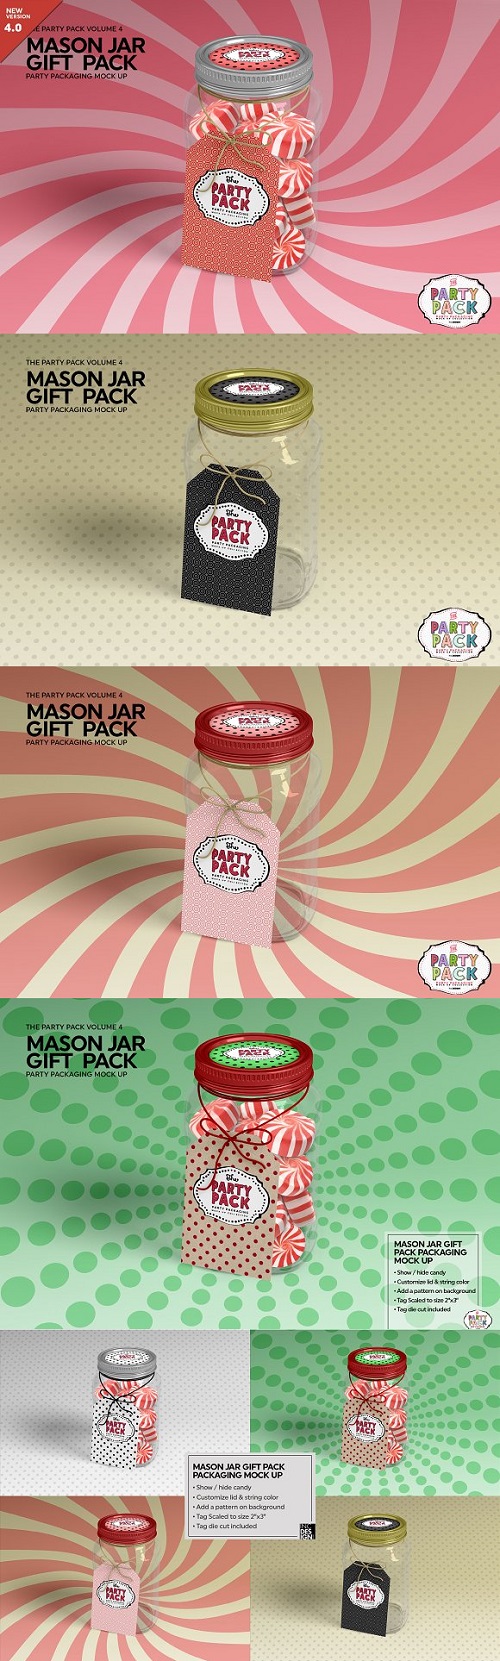 Mason Jar Gift Pack Mock Up - 2198455